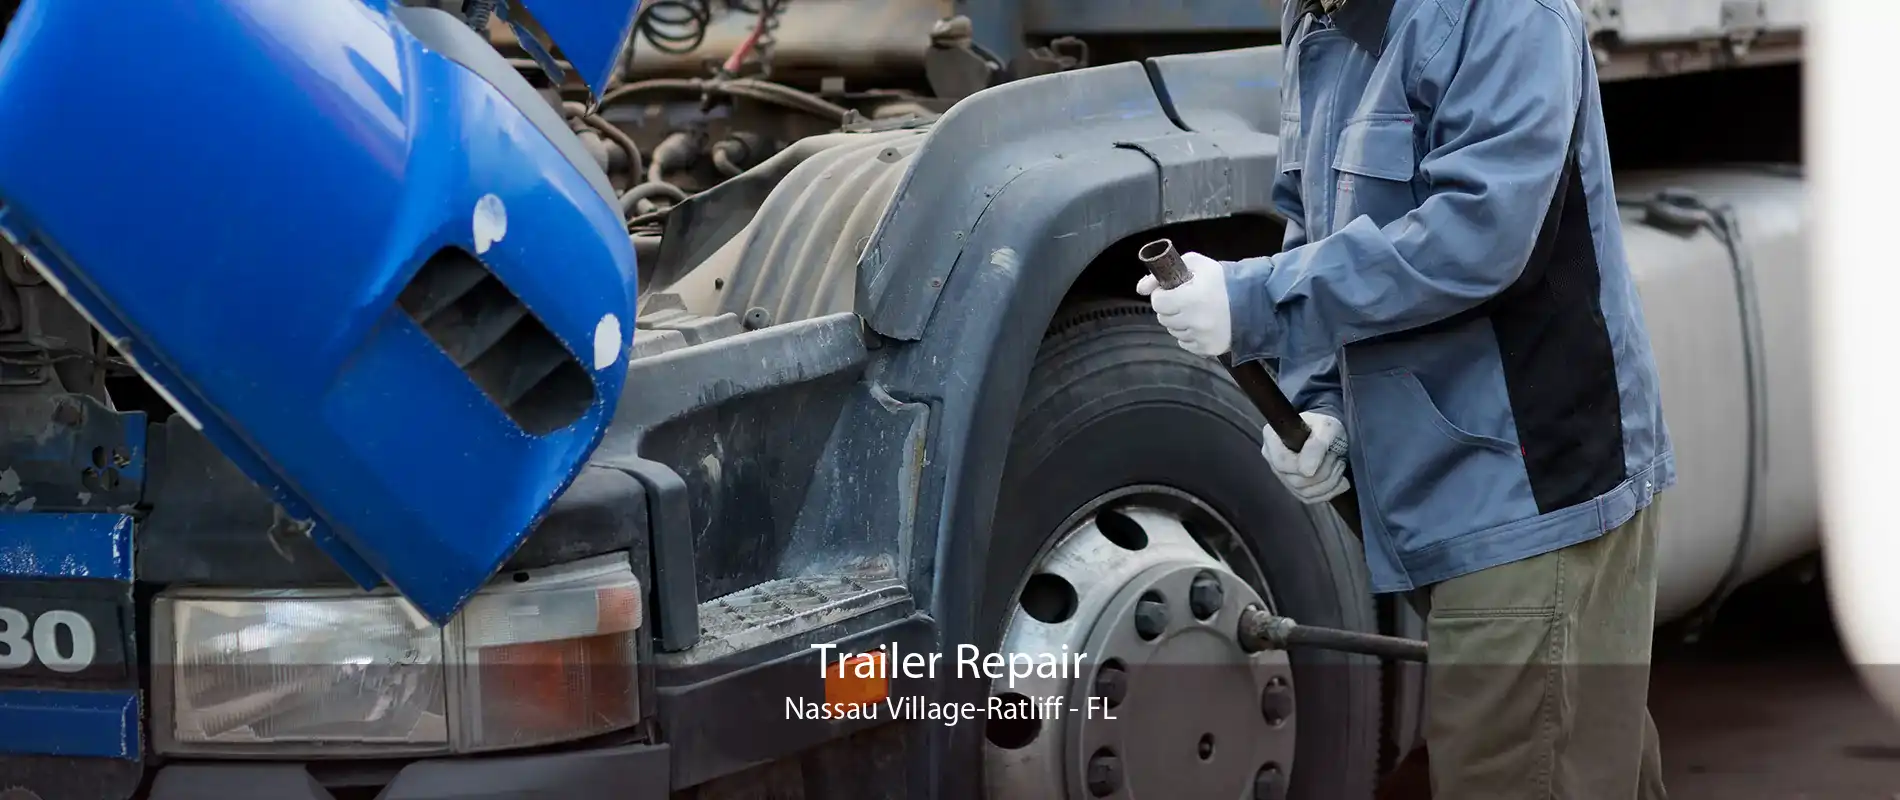 Trailer Repair Nassau Village-Ratliff - FL